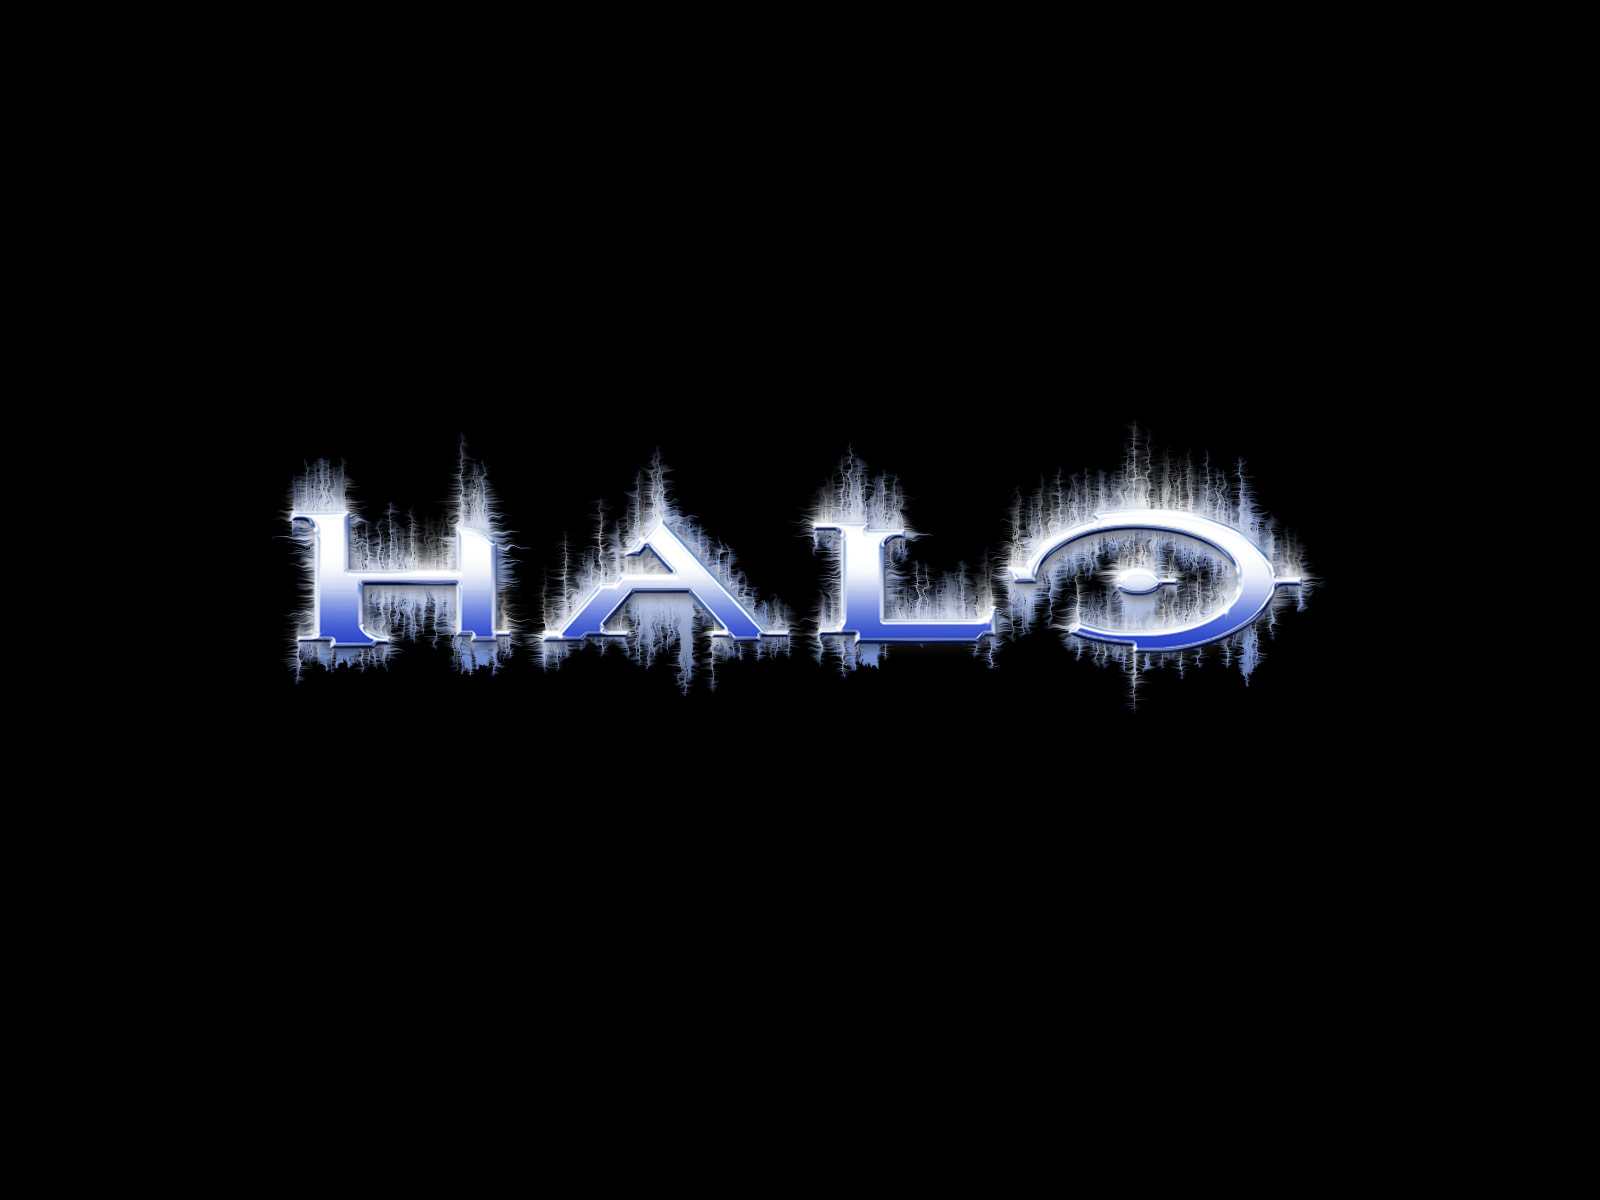 Halo Logo Wallpapers